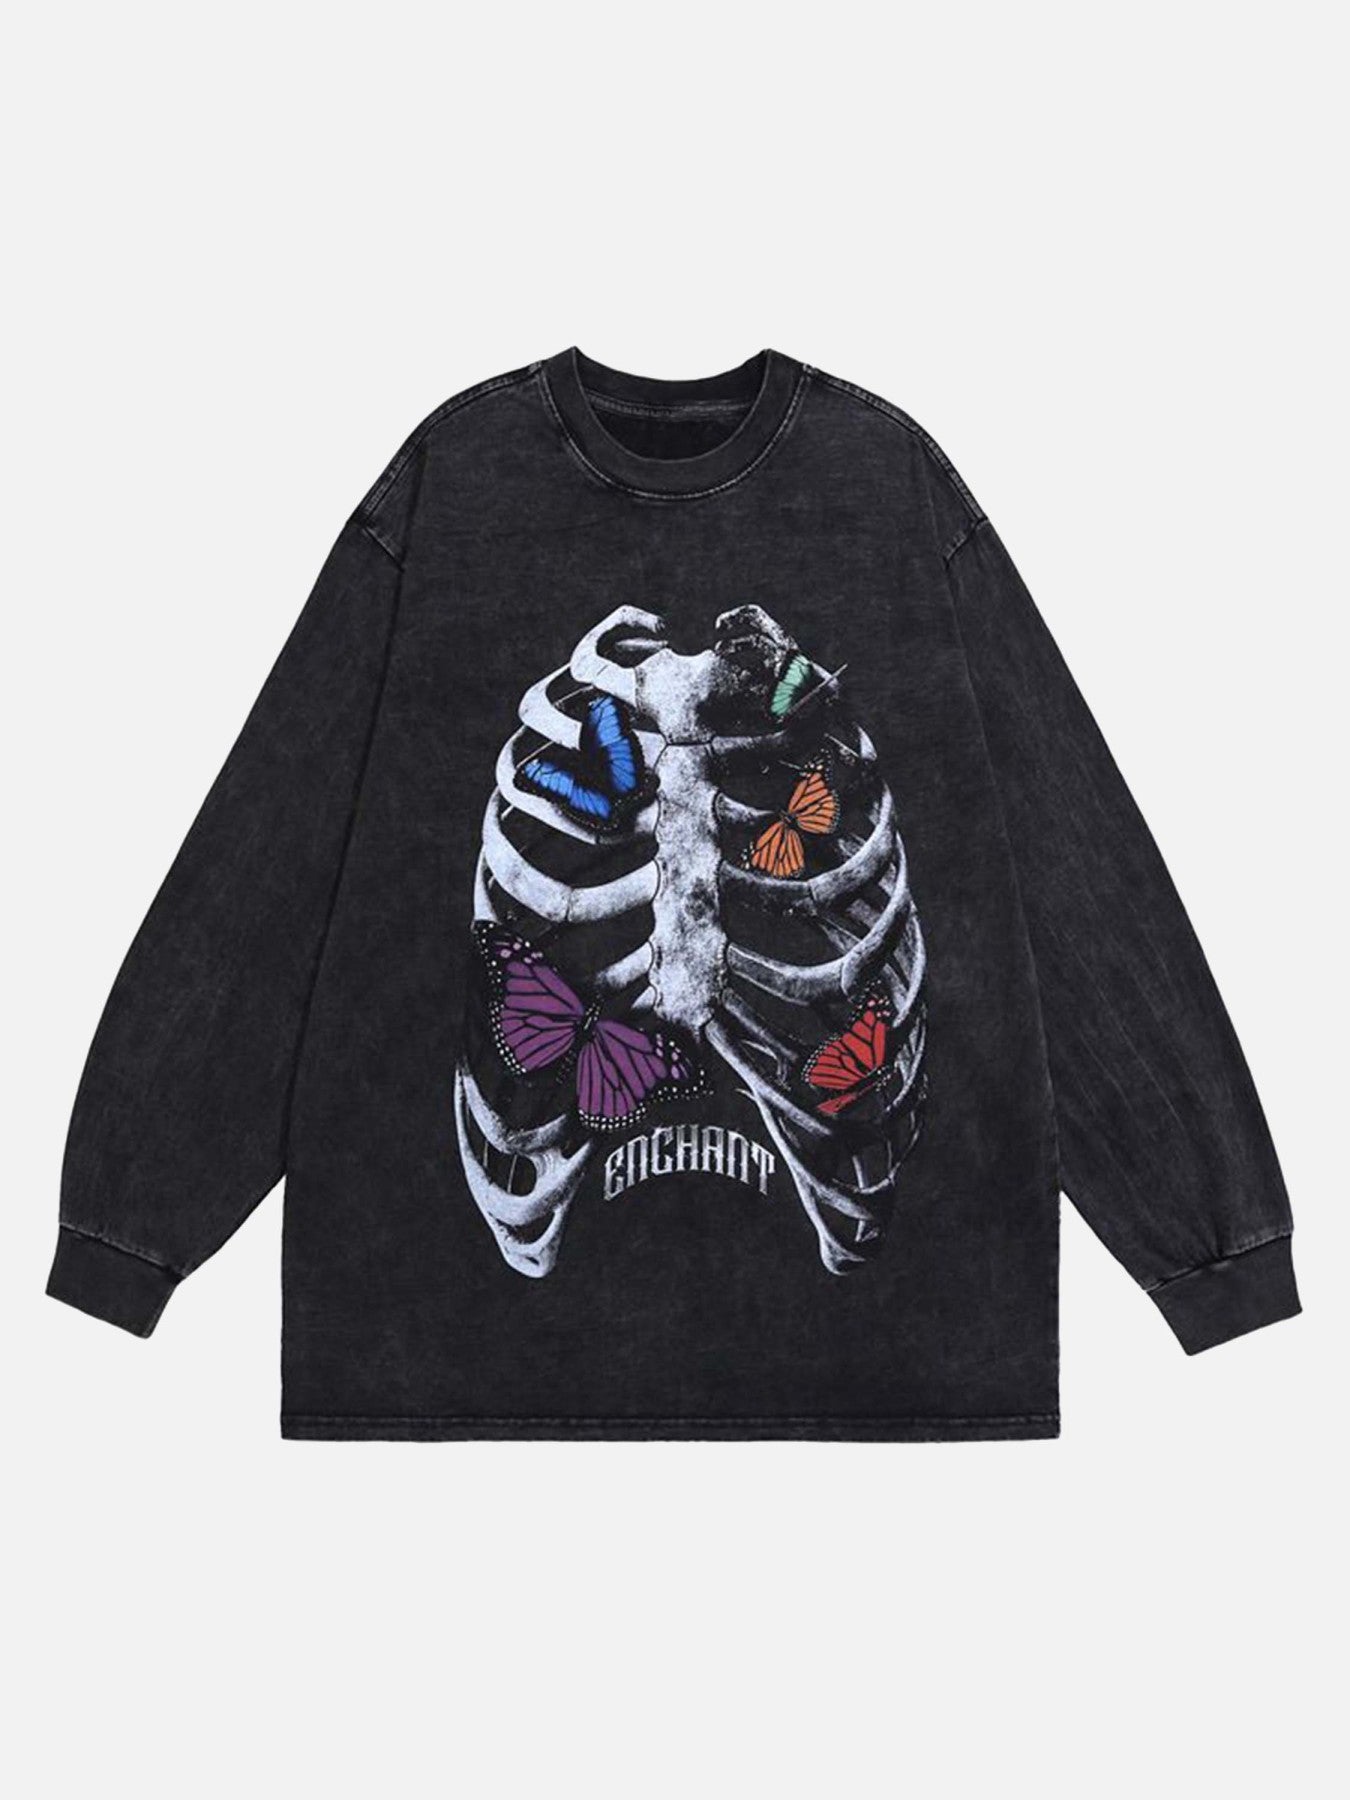 The Supermade Skull Butterfly Graffiti Long Sleeve T-Shirt